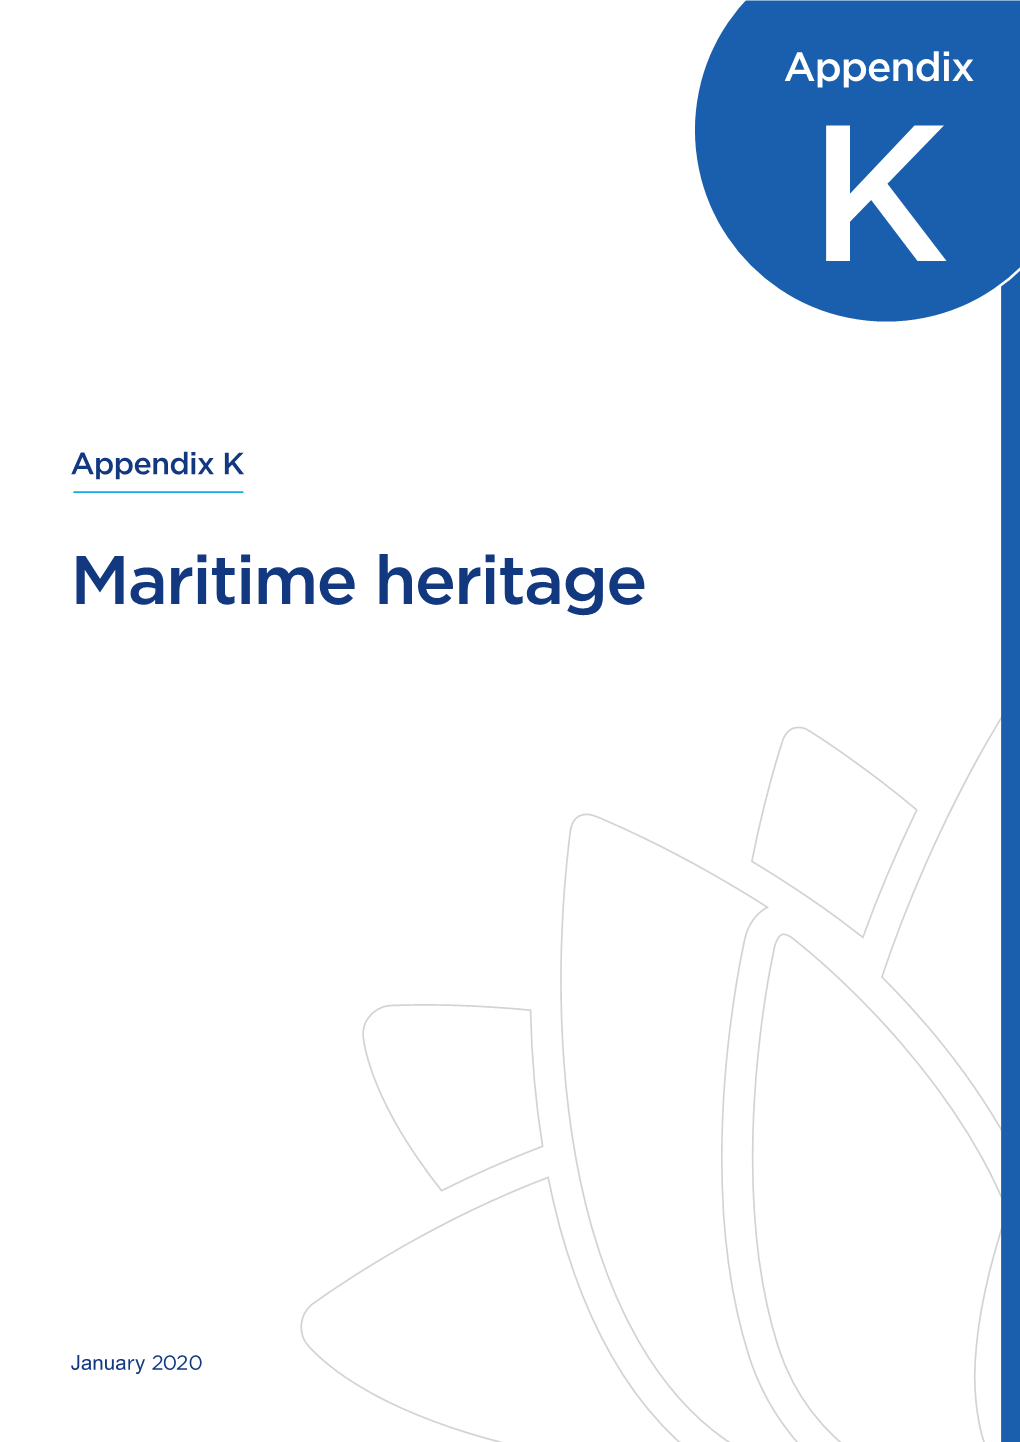 Appendix K Maritime Heritage